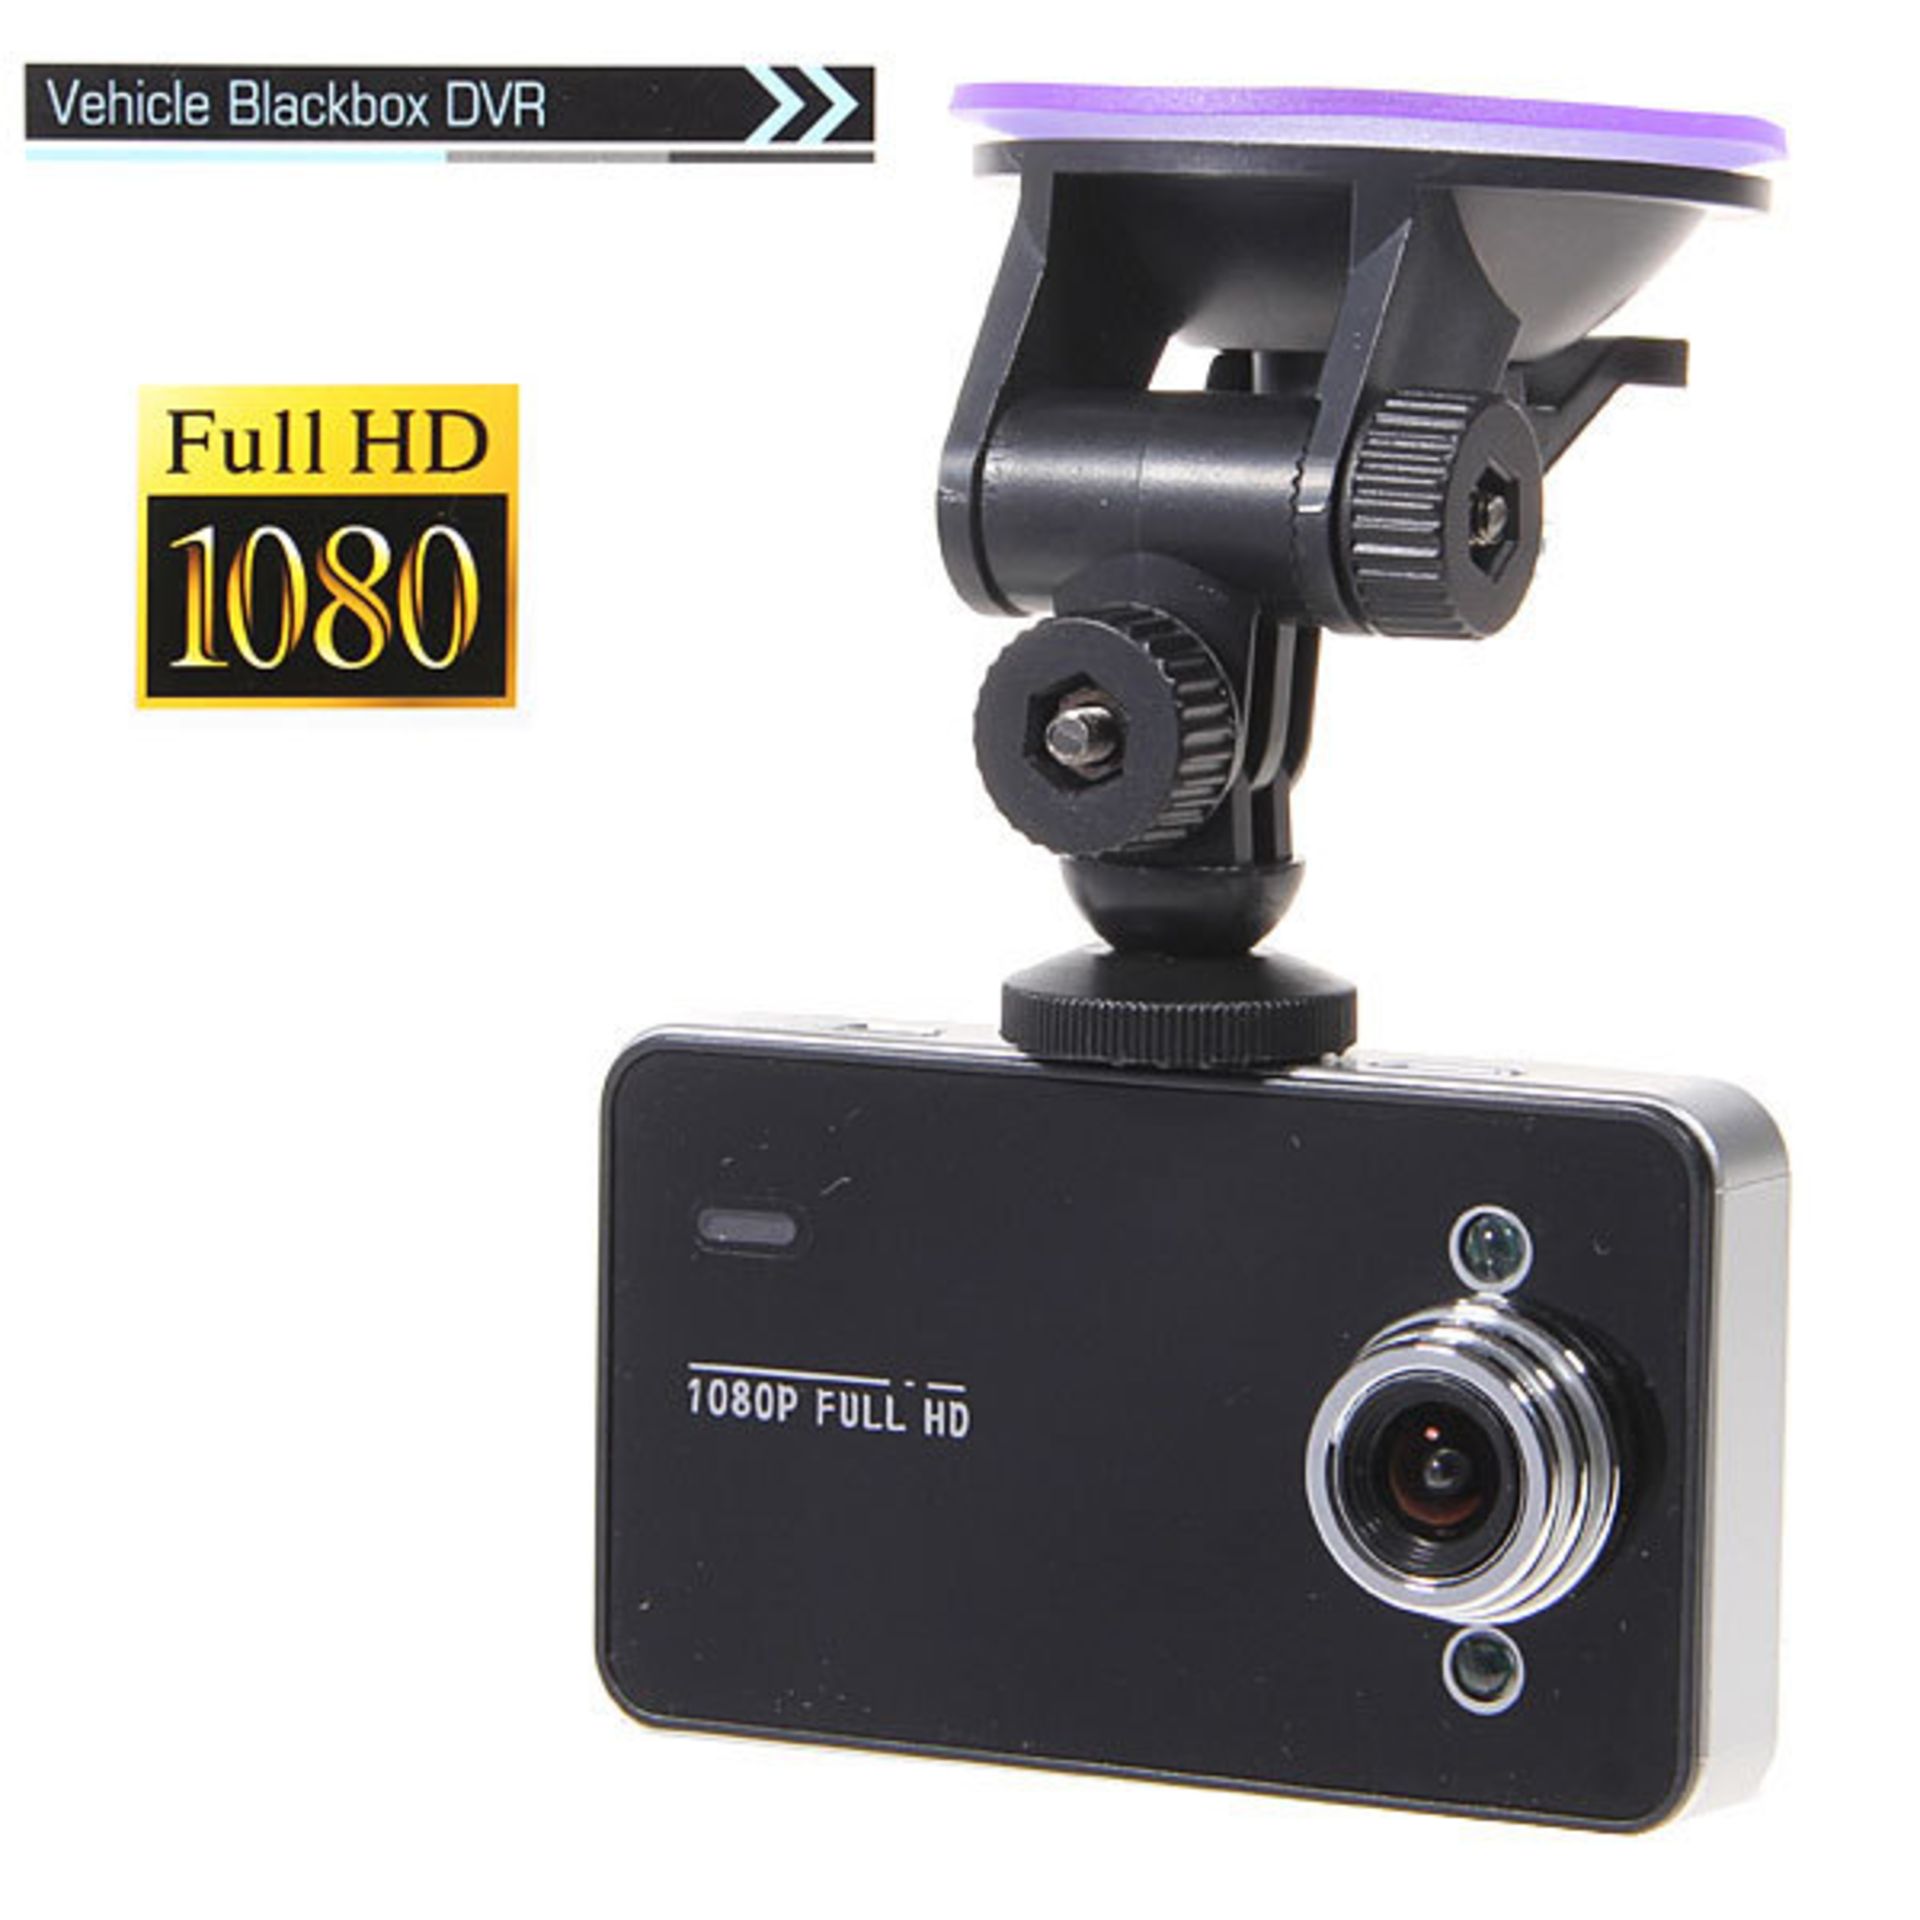 V Brand New Car Camera Blackbox DVR With Motion Detecting HD/DVR 1080p